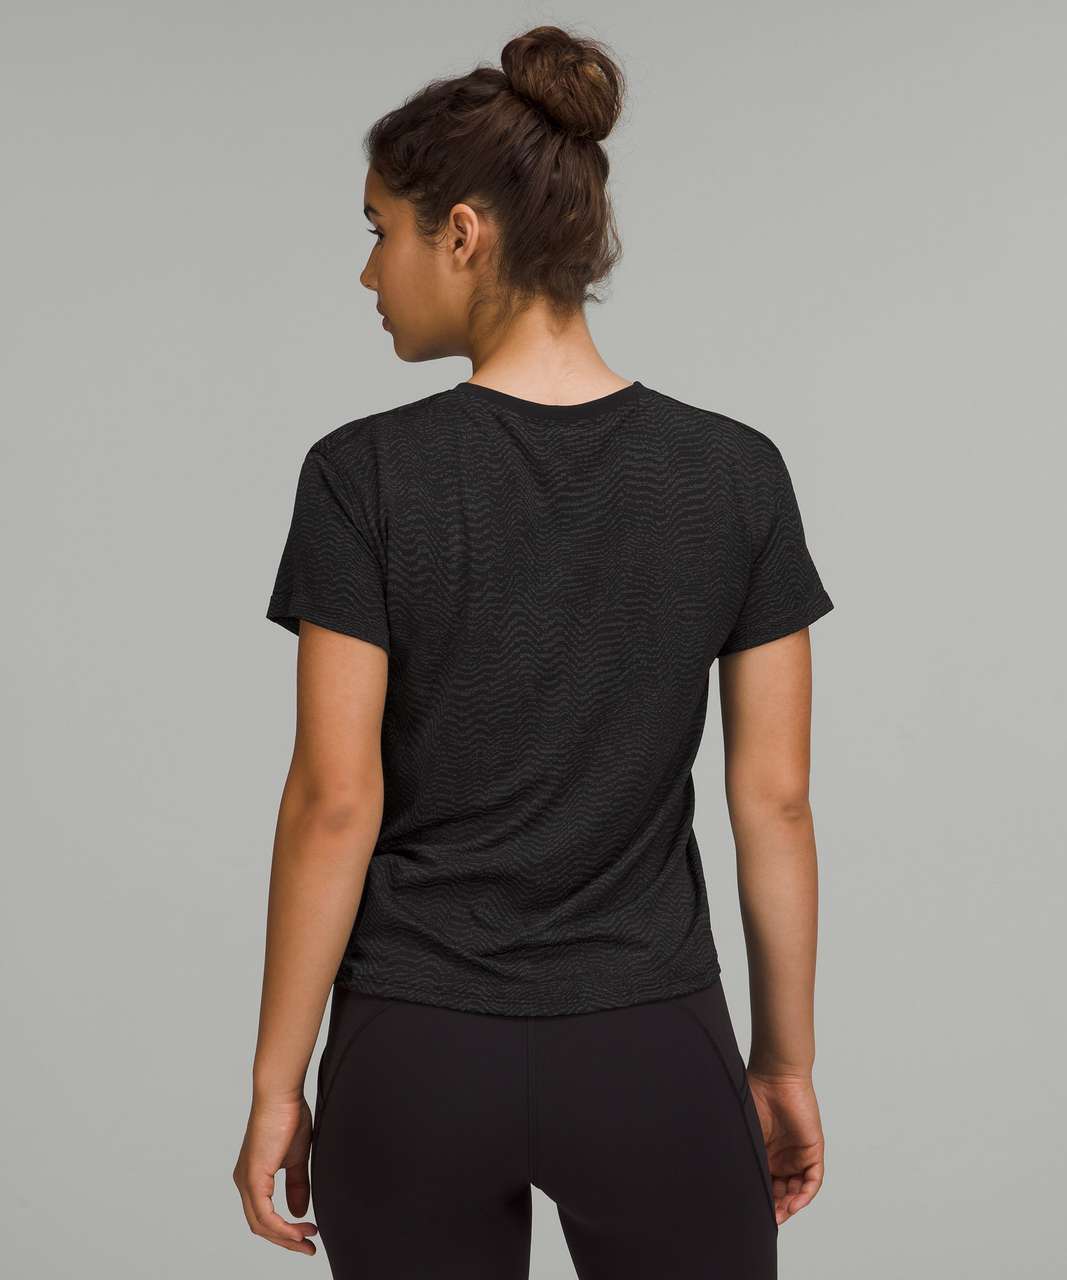 Lululemon Train to Be Seamless Short Sleeve T-Shirt - Ripple Wave Black / Graphite Grey